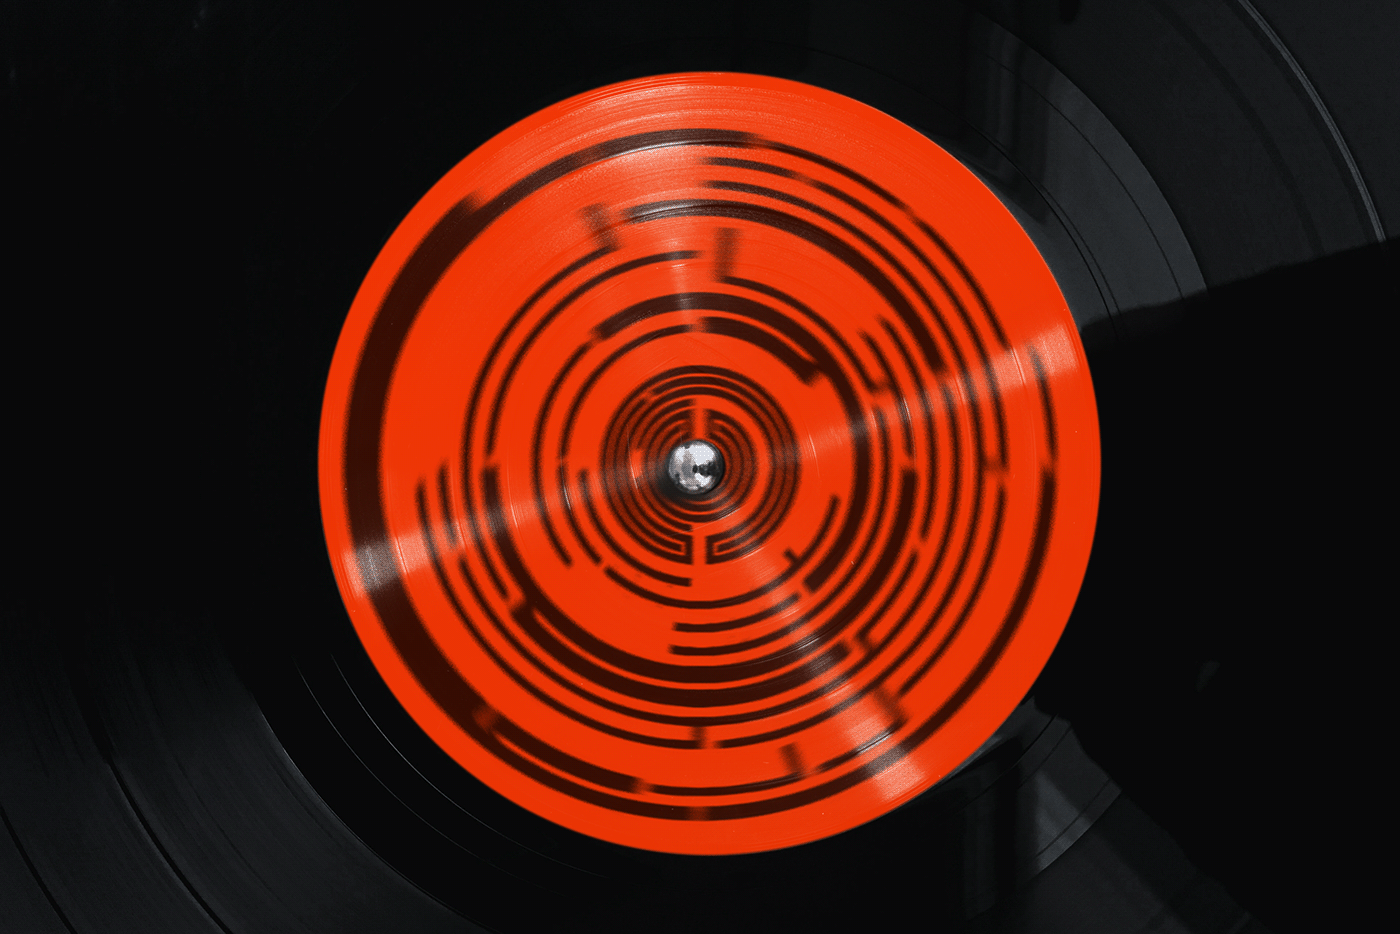 coin music pendulum photomanipulation edm Packaging spotify Mockup BBC Radio One malta